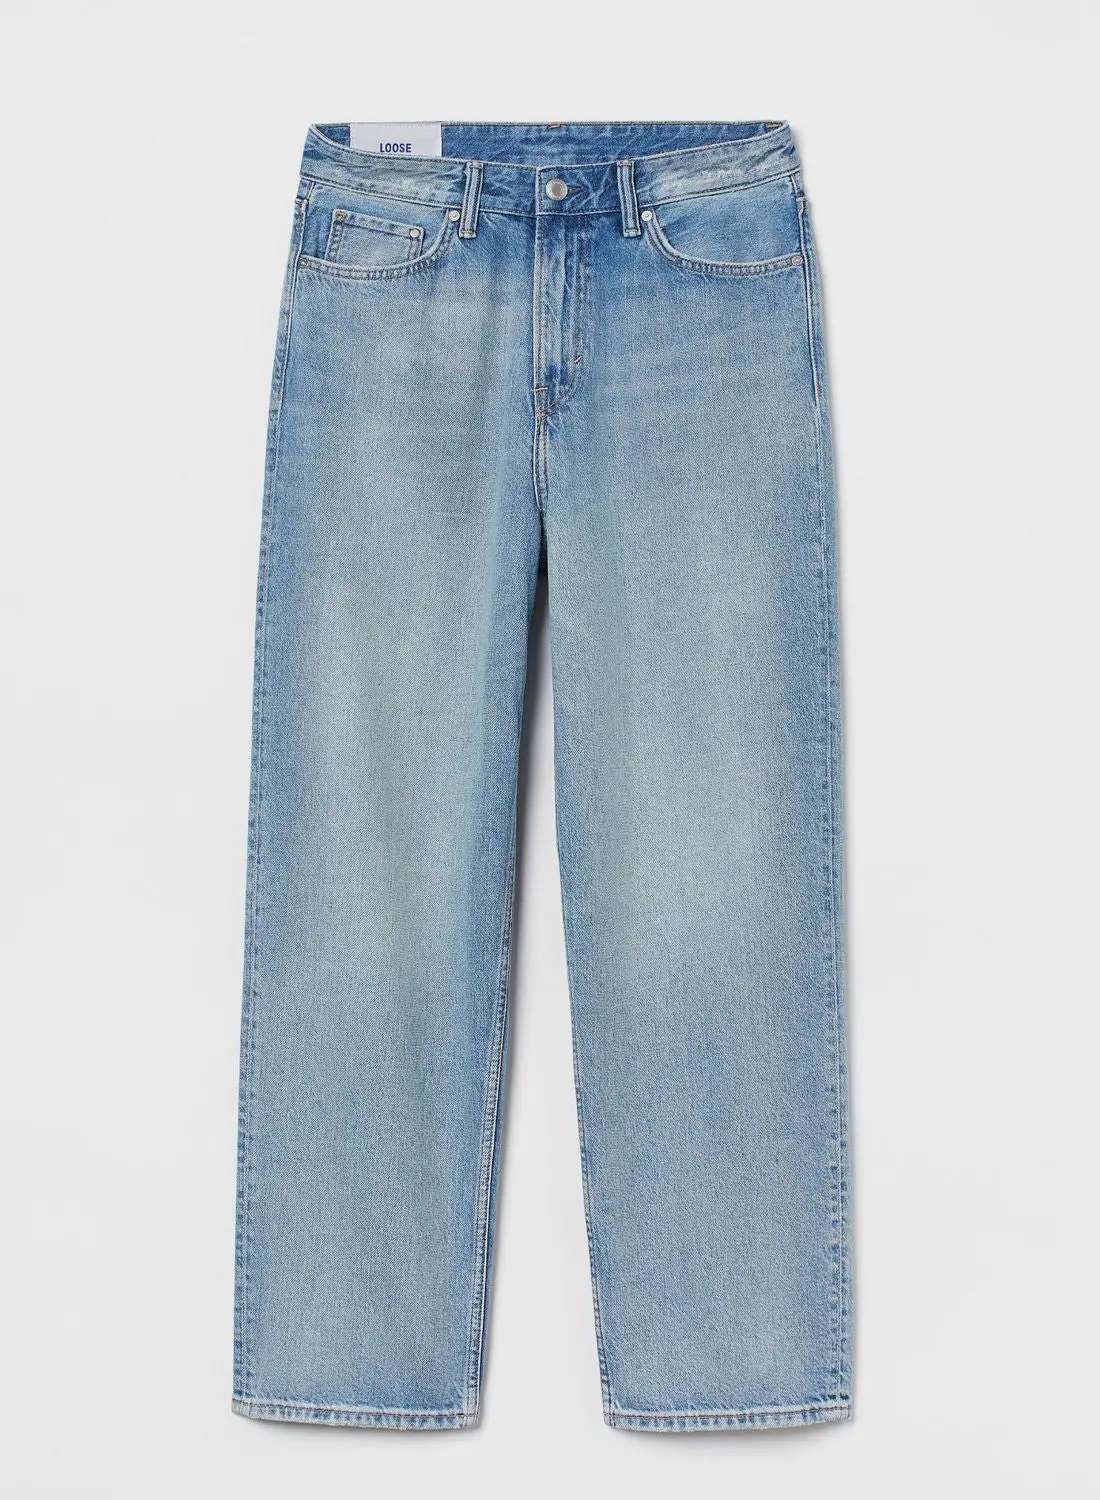 H&M Loose Fit Jeans